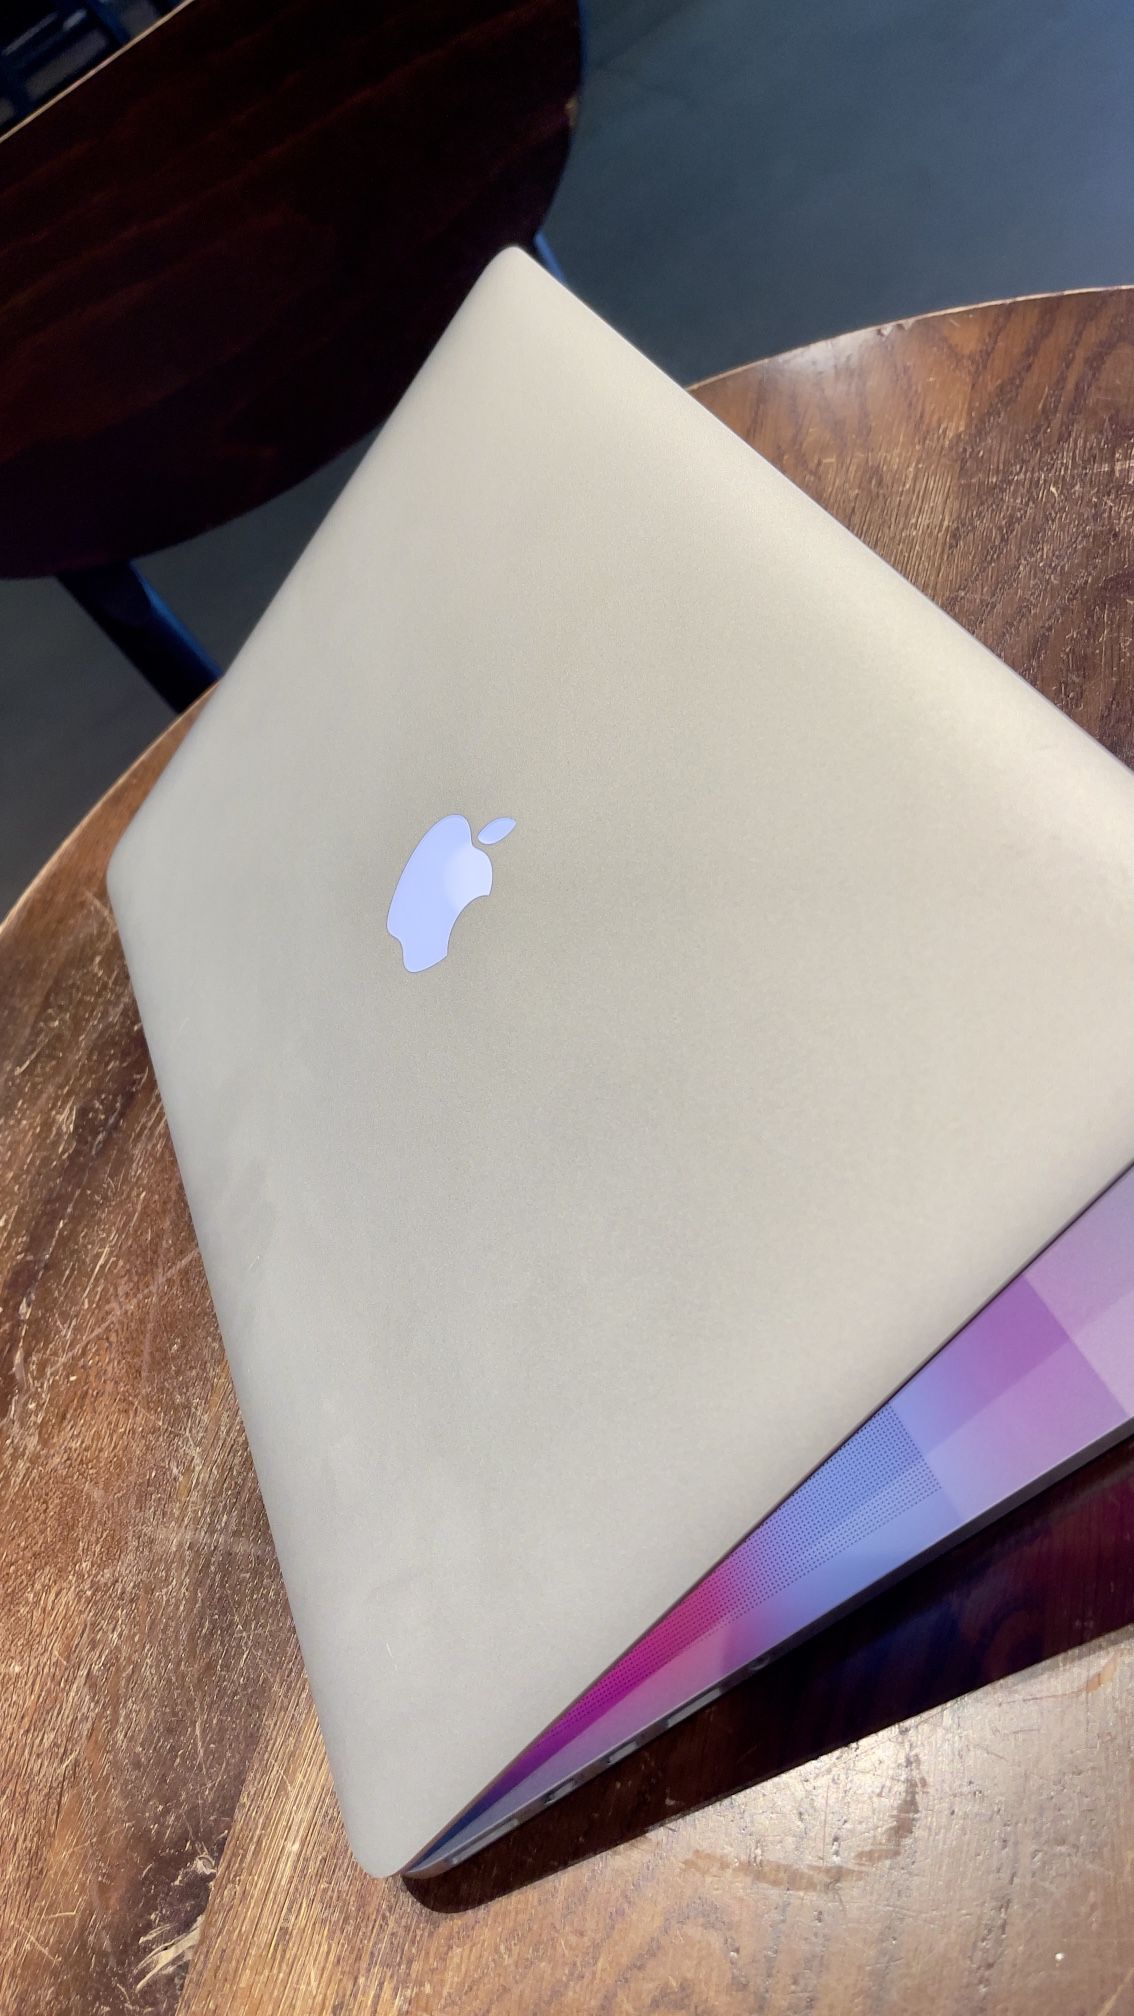 Apple MacBook Pro 15” Retina Core I7, 16GB RAM 500GB SSD $375 